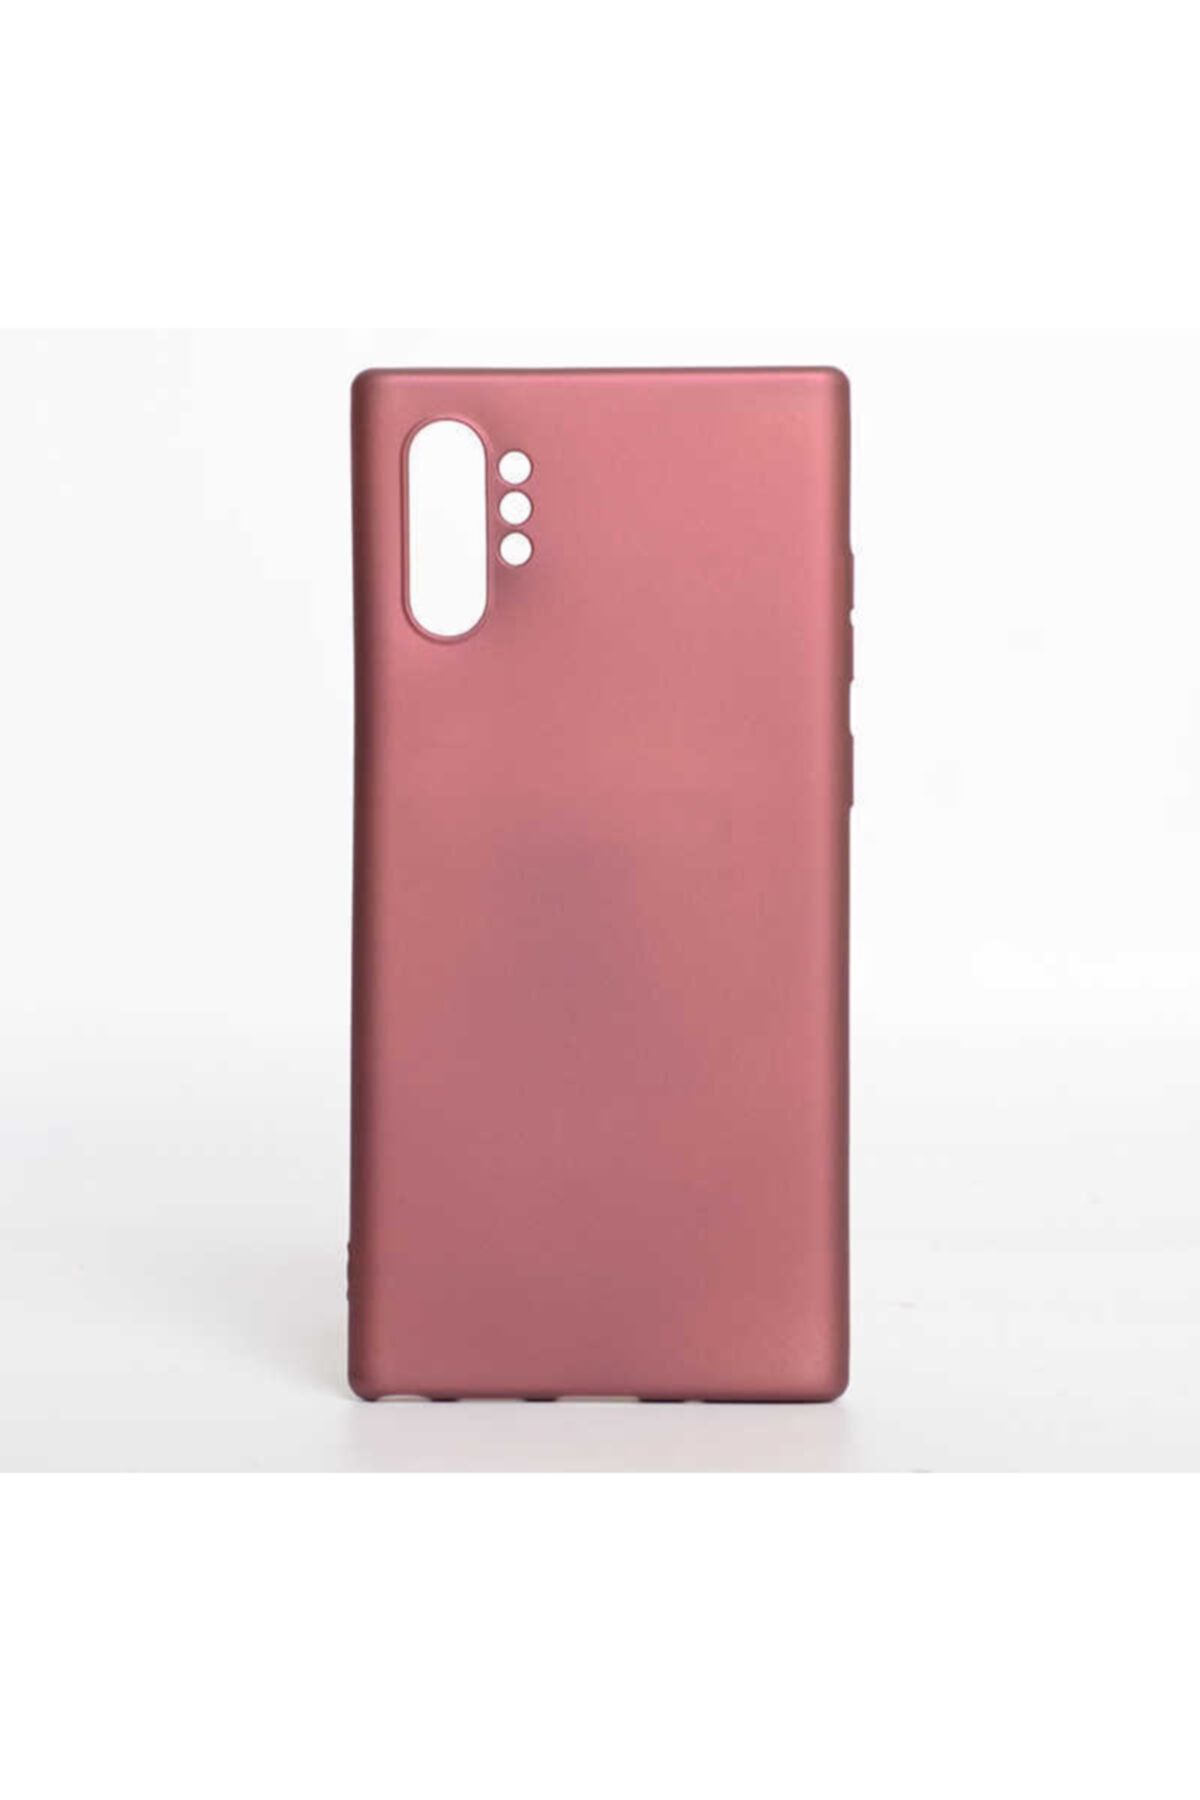 İncisoft Galaxy Note 10 Plus Uyumlu Ince Yumuşak Soft Tasarım Renkli Silikon Kılıf